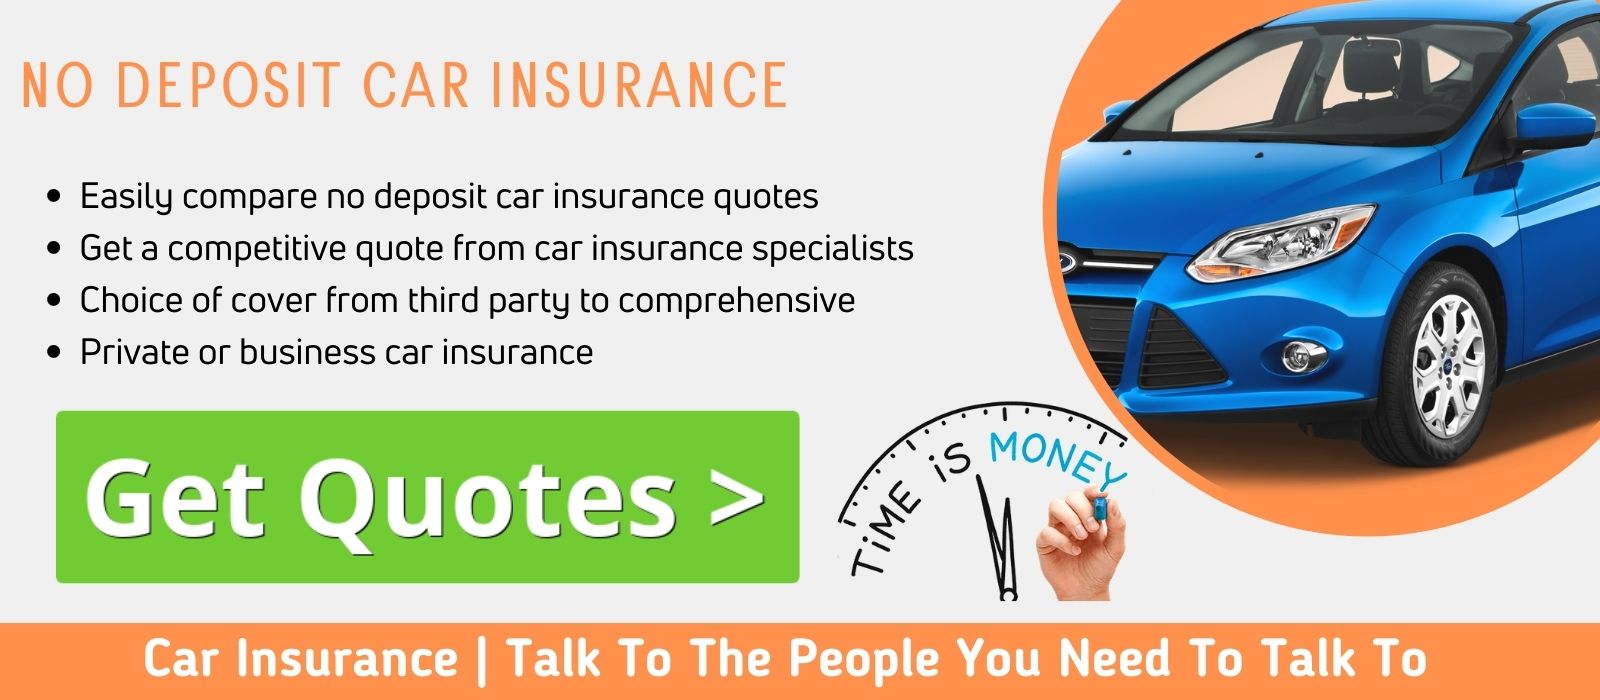 No Deposit Car Insurance Comparison  UKLI Compare